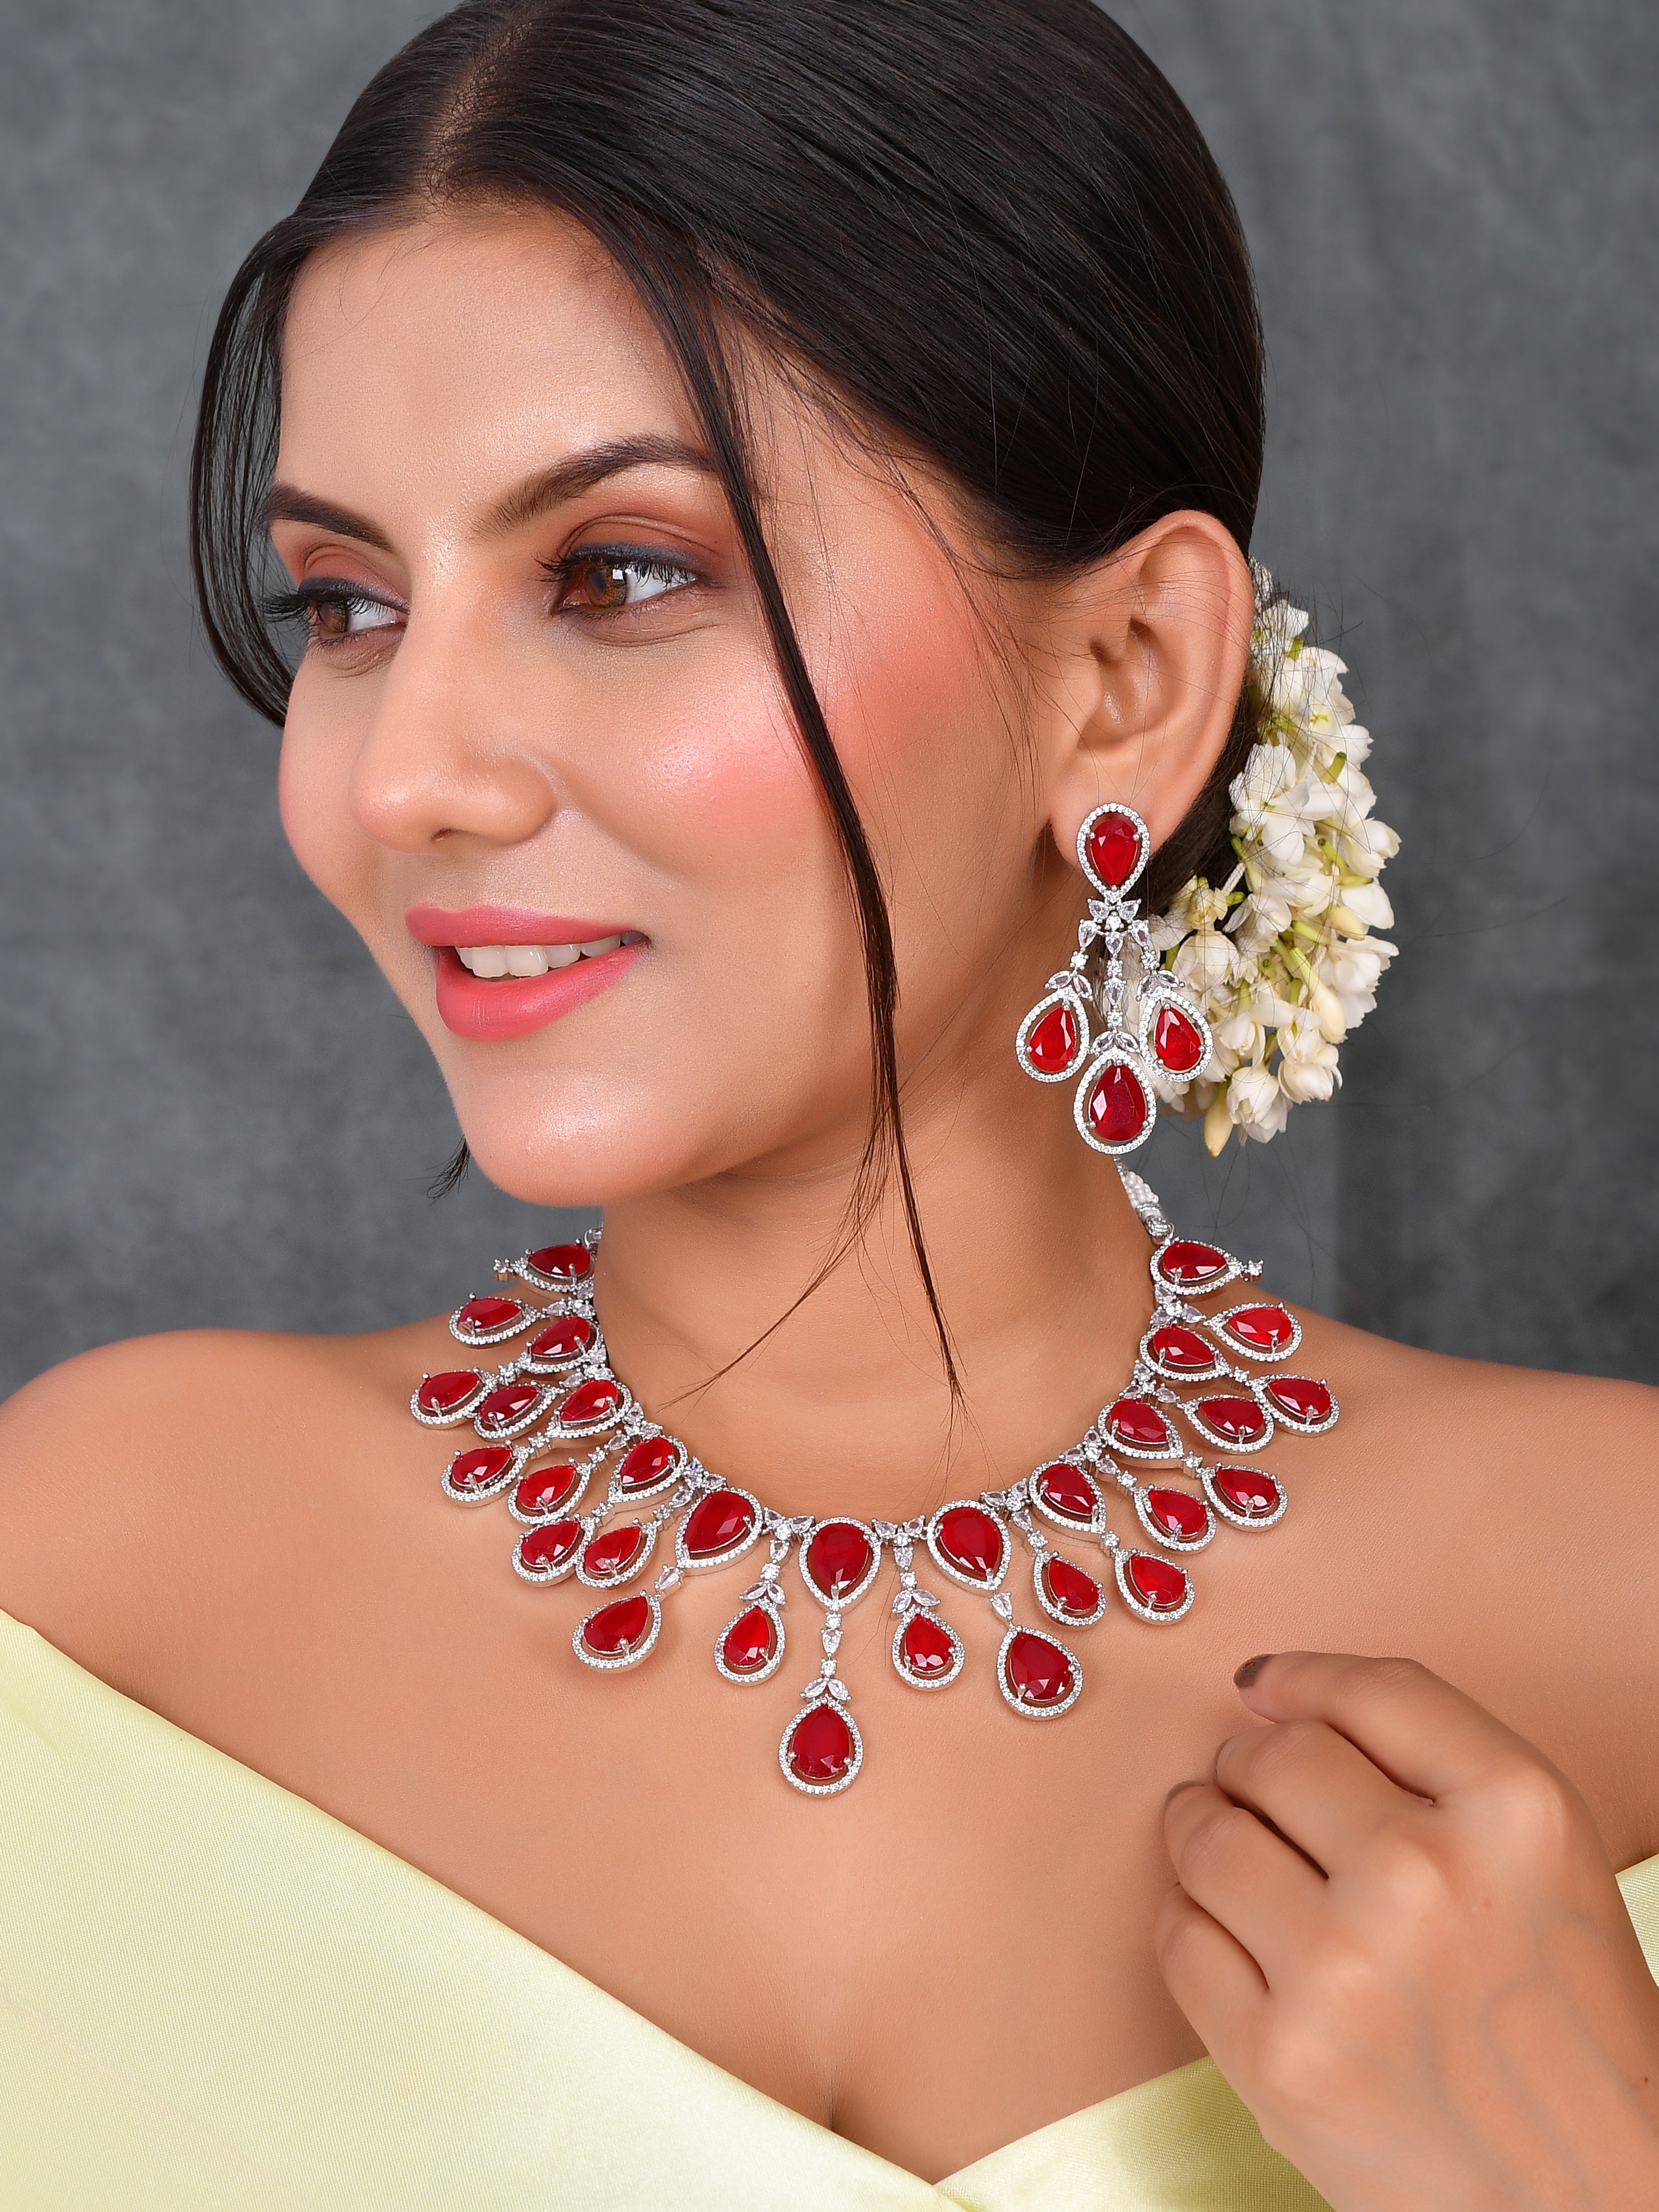 Buy 4mm CZ Diamond Stud Earrings, Silver Stud Earrings, Cartilage Earring,  Tiny Stud Earrings, Bridesmaid Gift, Dainty Earrings, Fake Diamond Online  in India - Etsy